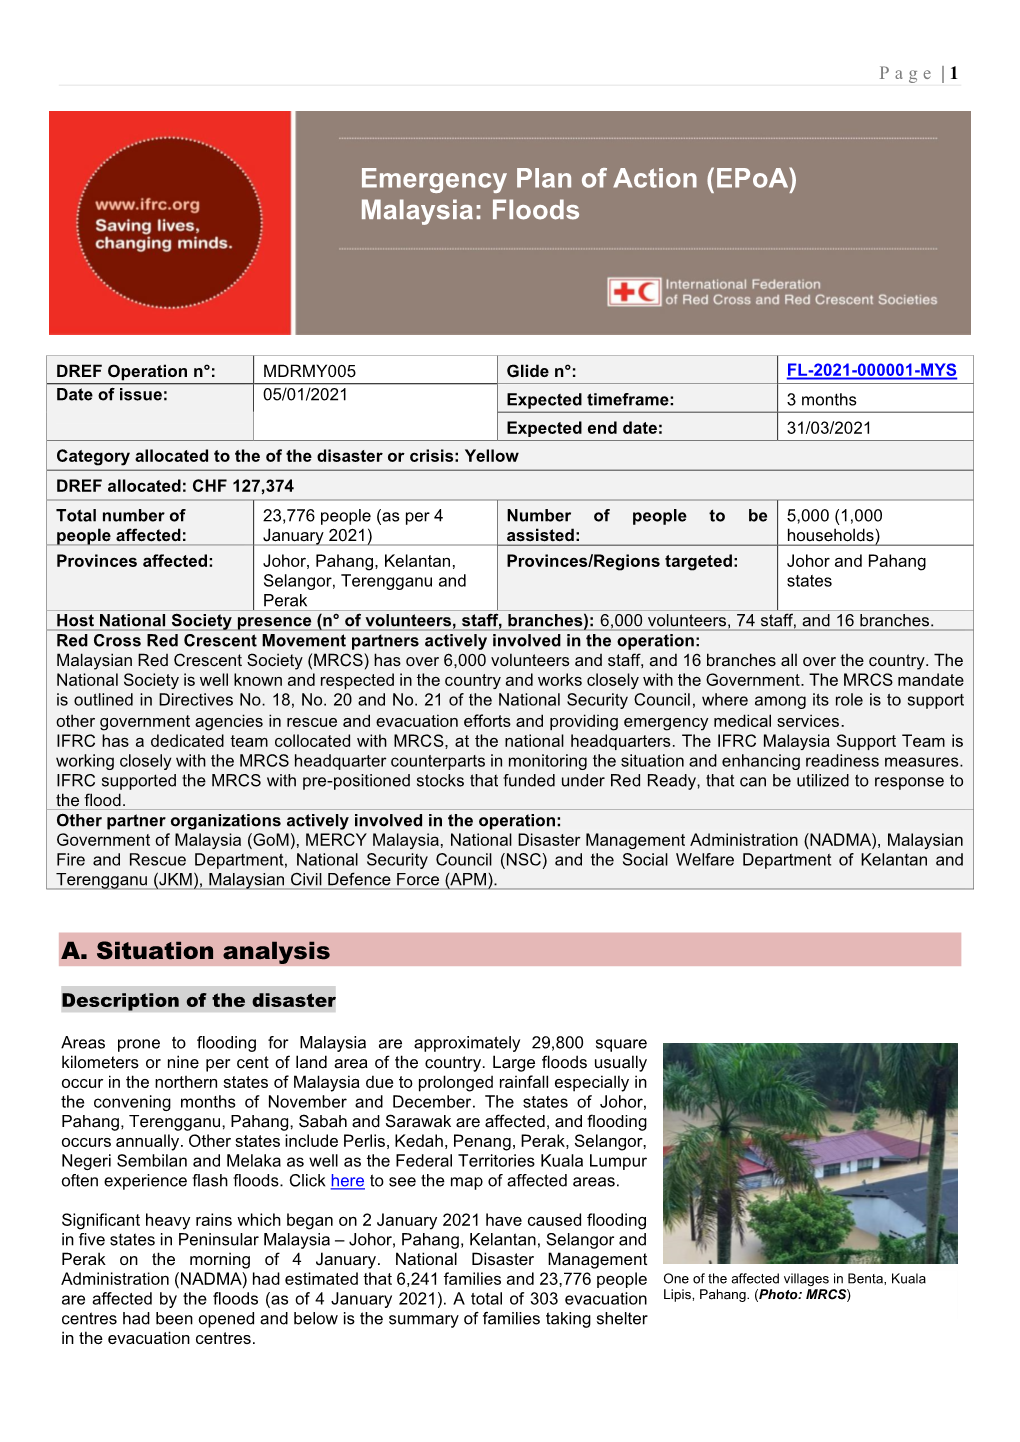 Emergency Plan of Action (Epoa) Malaysia: Floods